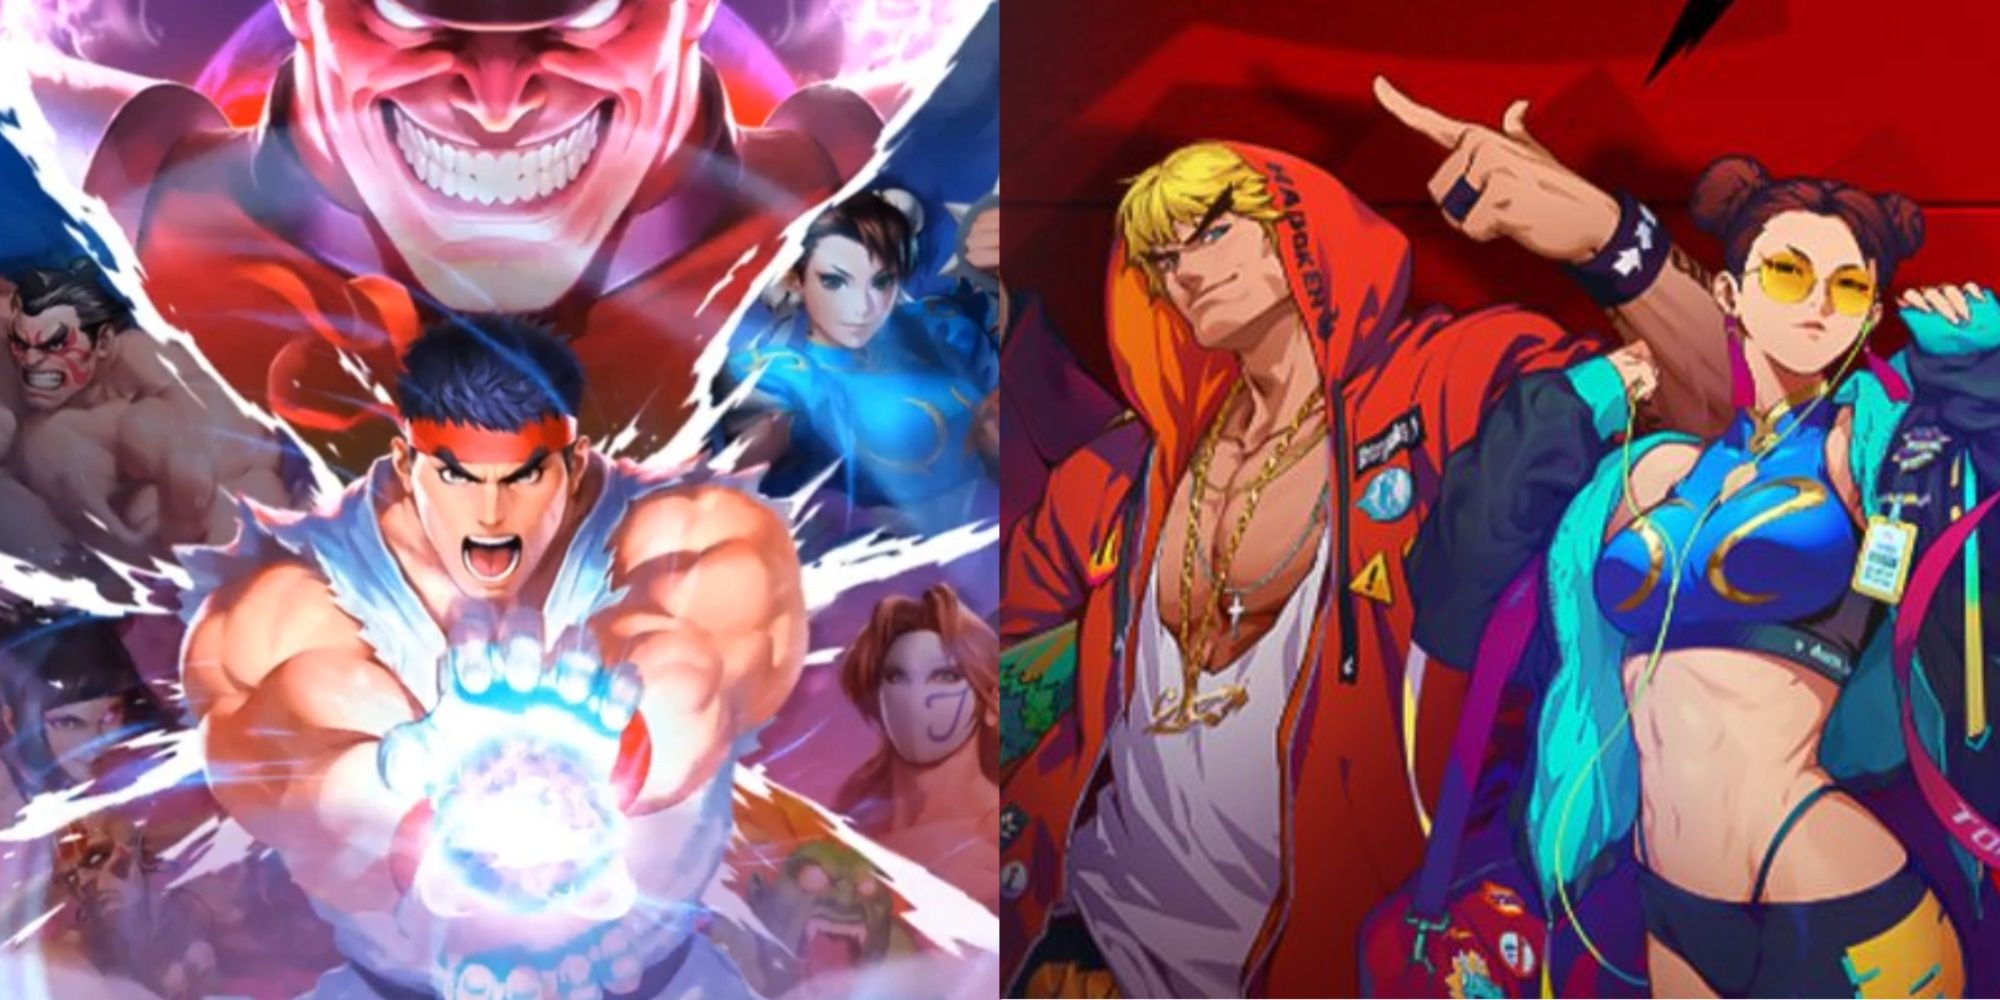 Best Combo In-game Poison & Blanka! - Street Fighter: Duel 